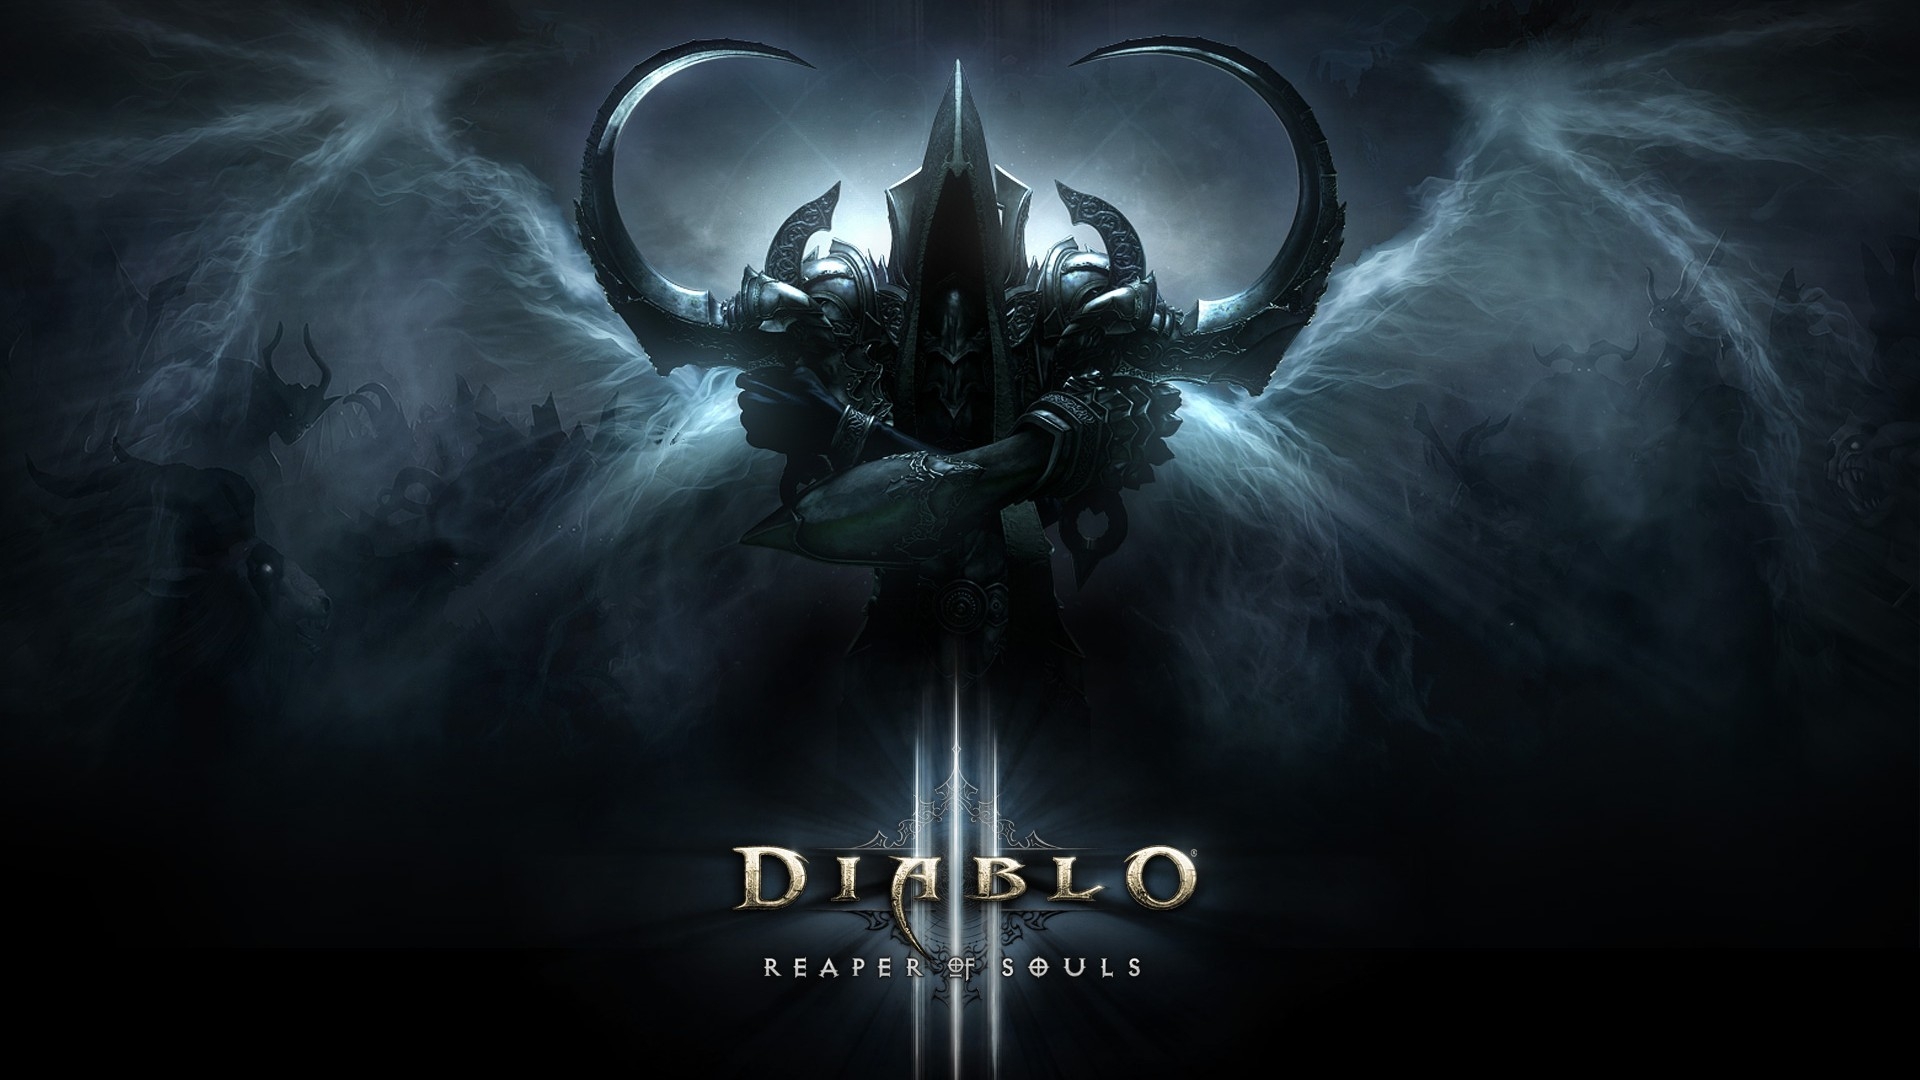 Reaper of Souls Diablo III for 1920 x 1080 HDTV 1080p resolution